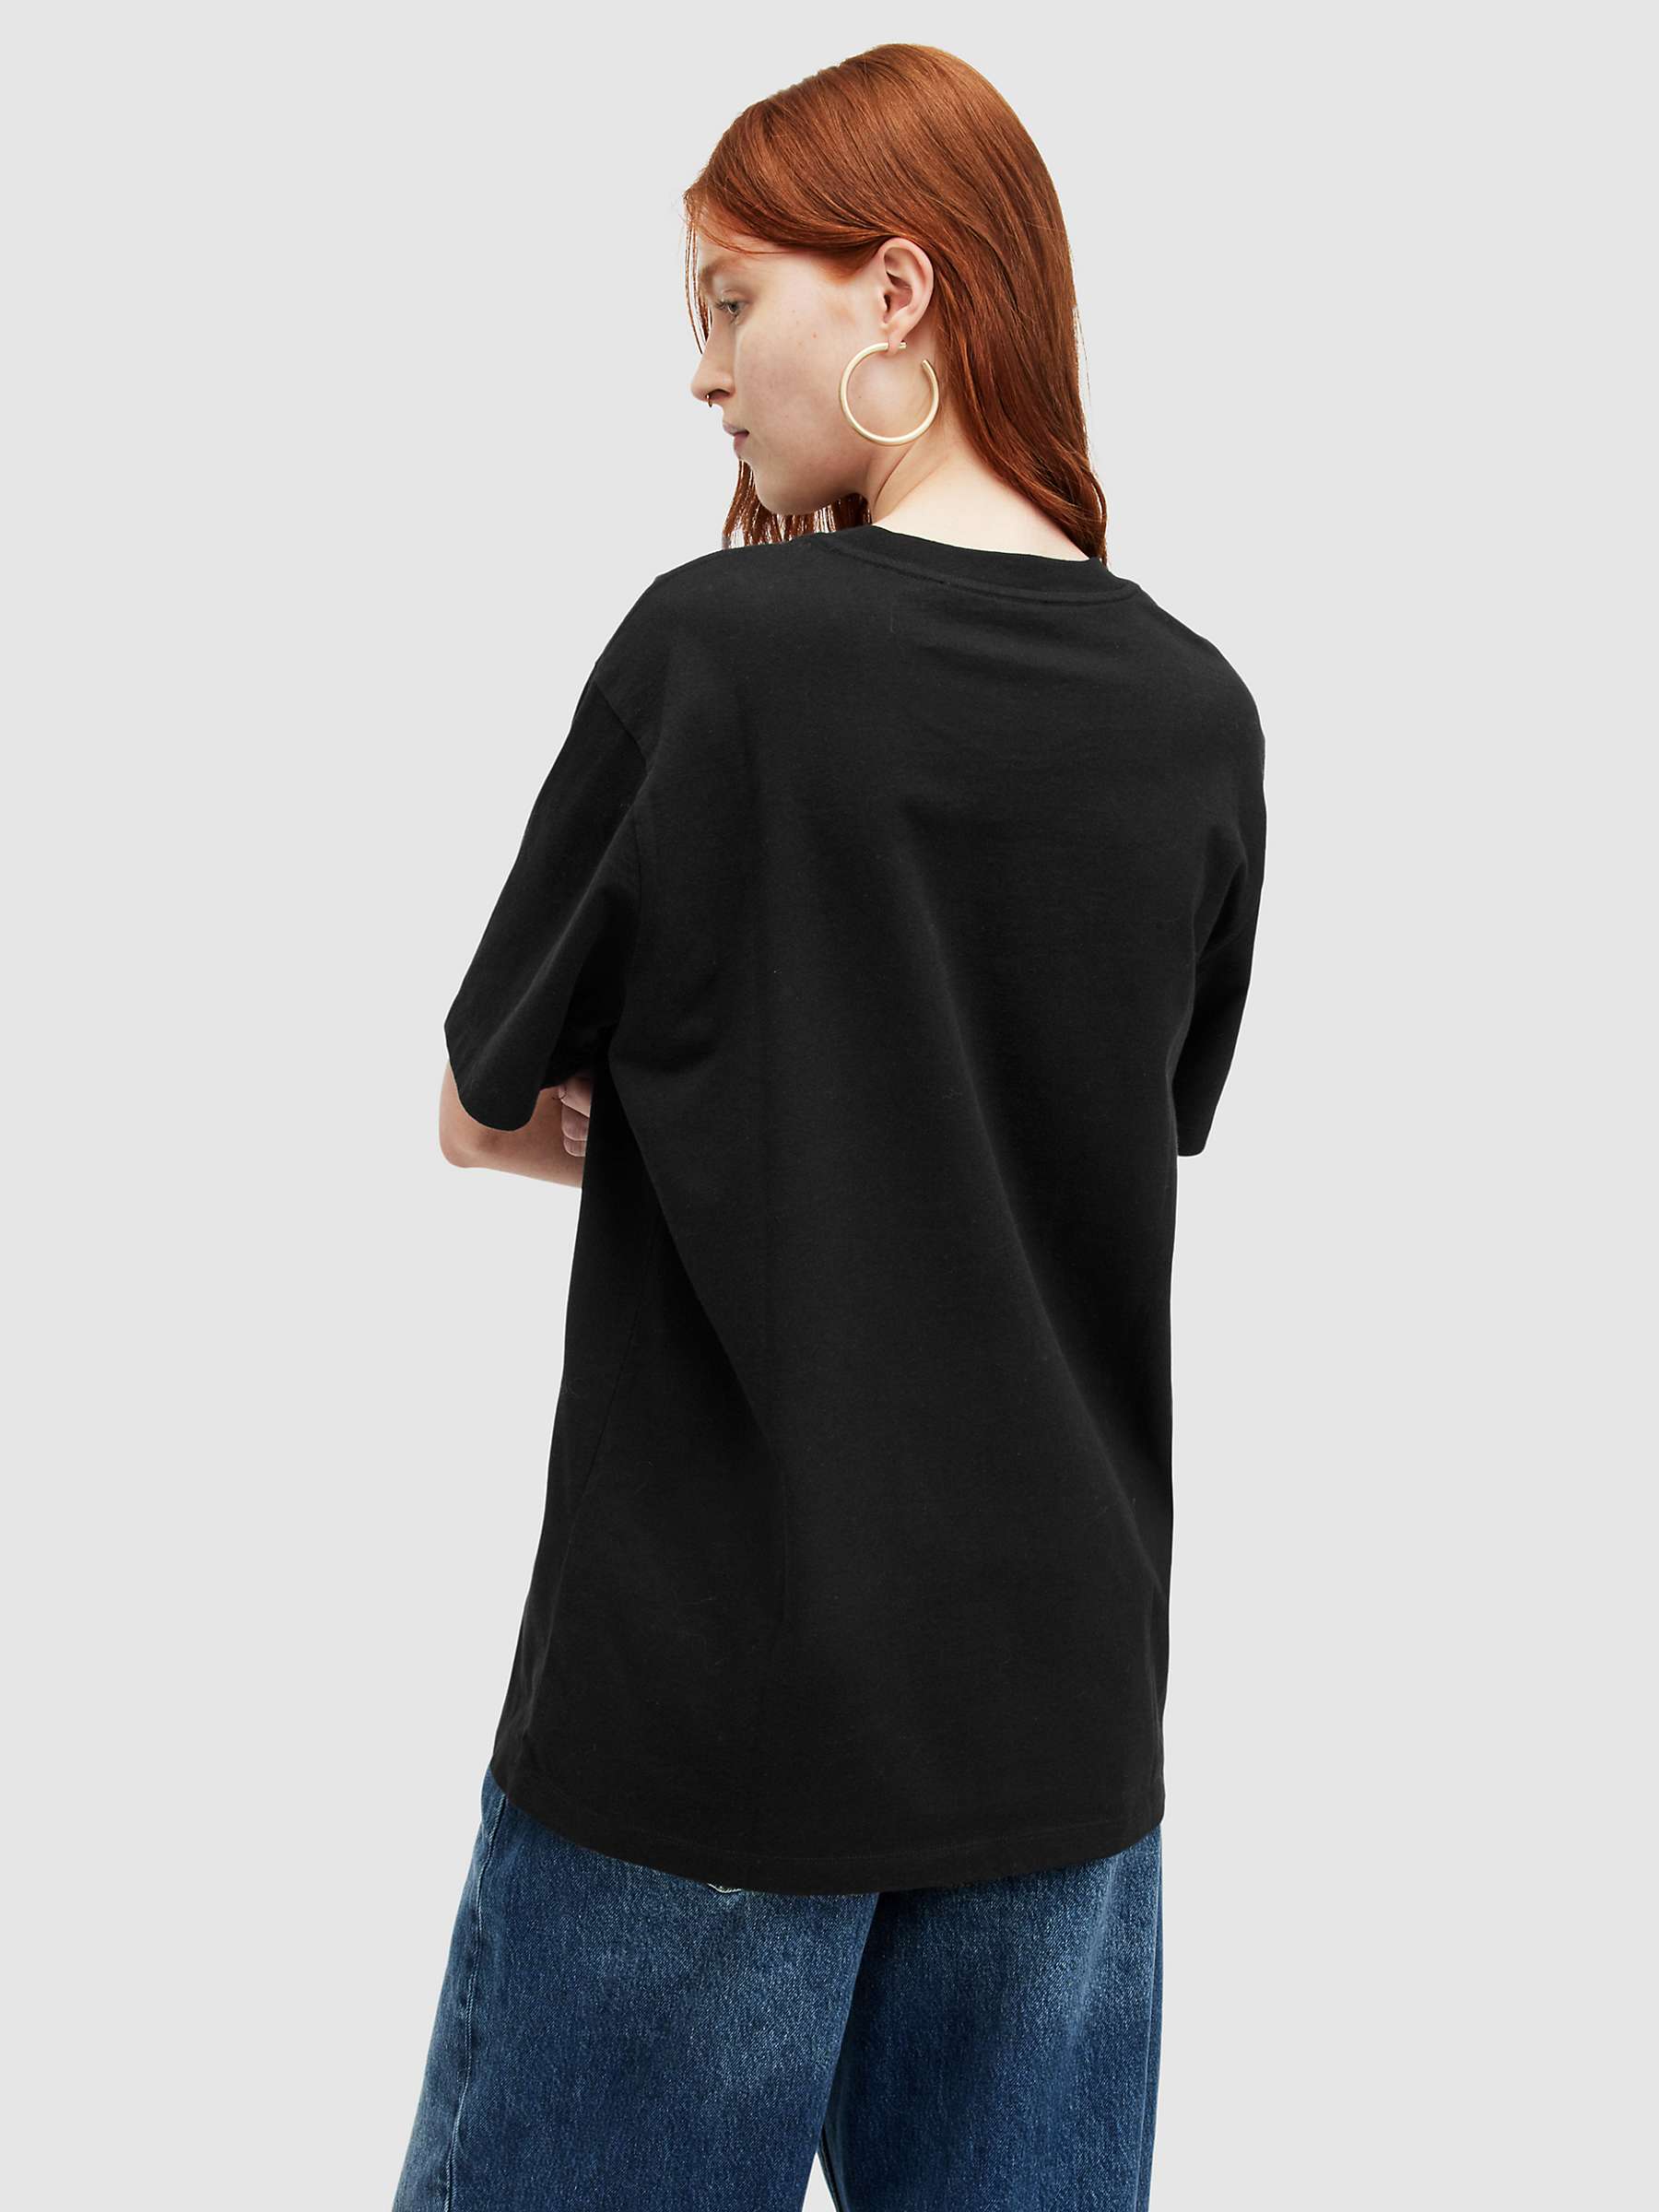 Buy AllSaints Pippa Boyfriend Fit T-Shirt Online at johnlewis.com